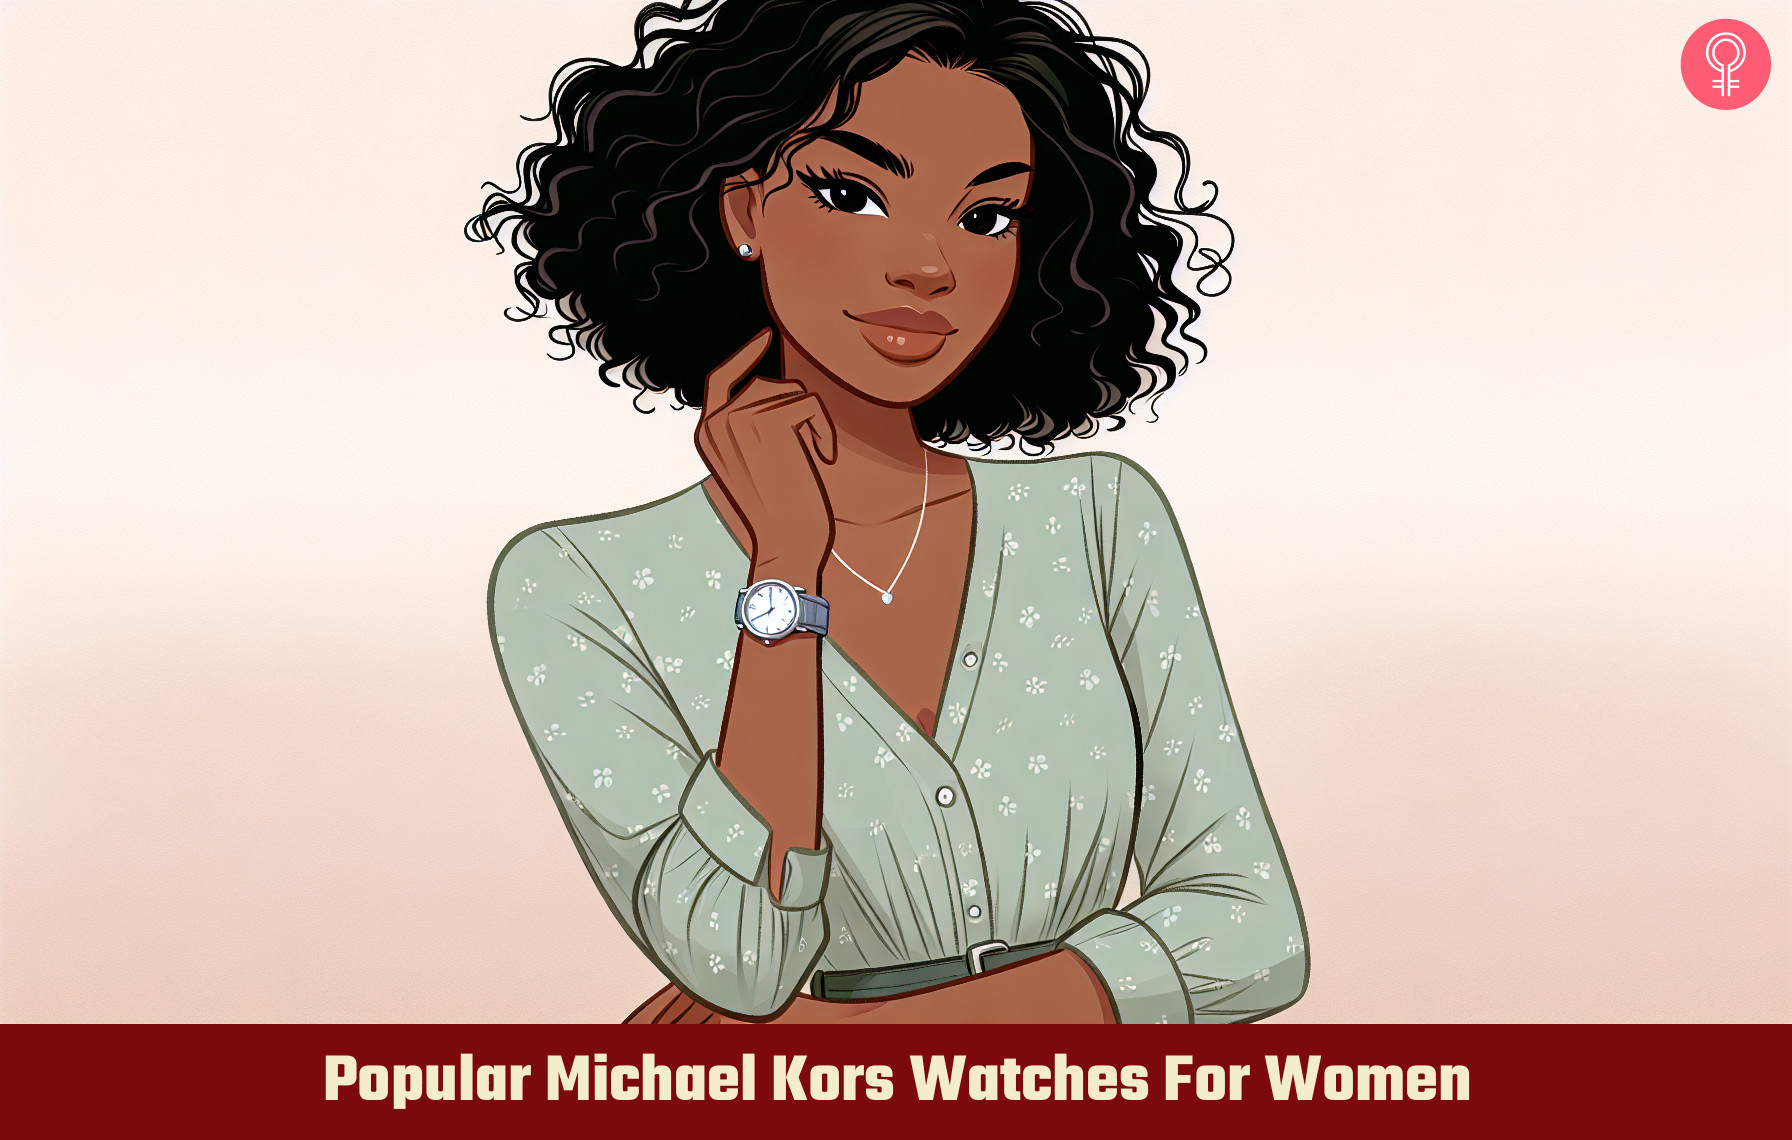 Michael Kors watches for women